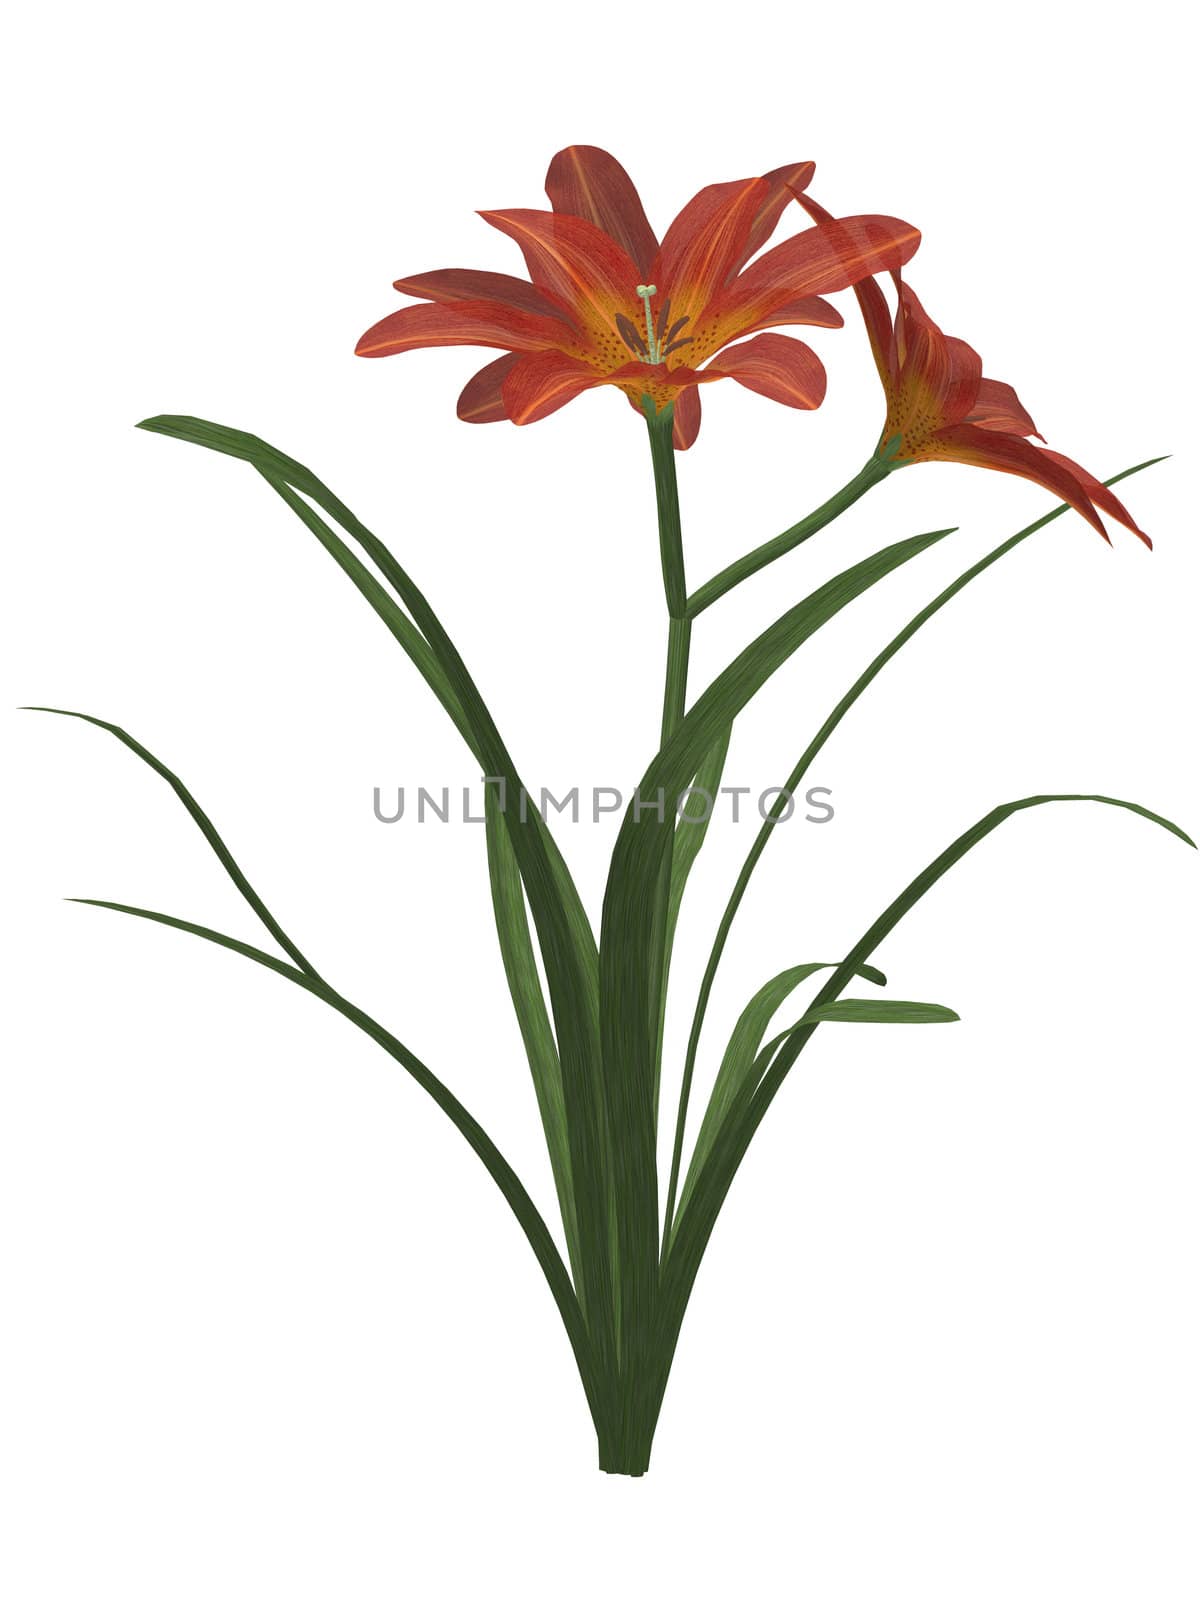 Orange Lily by kathygold